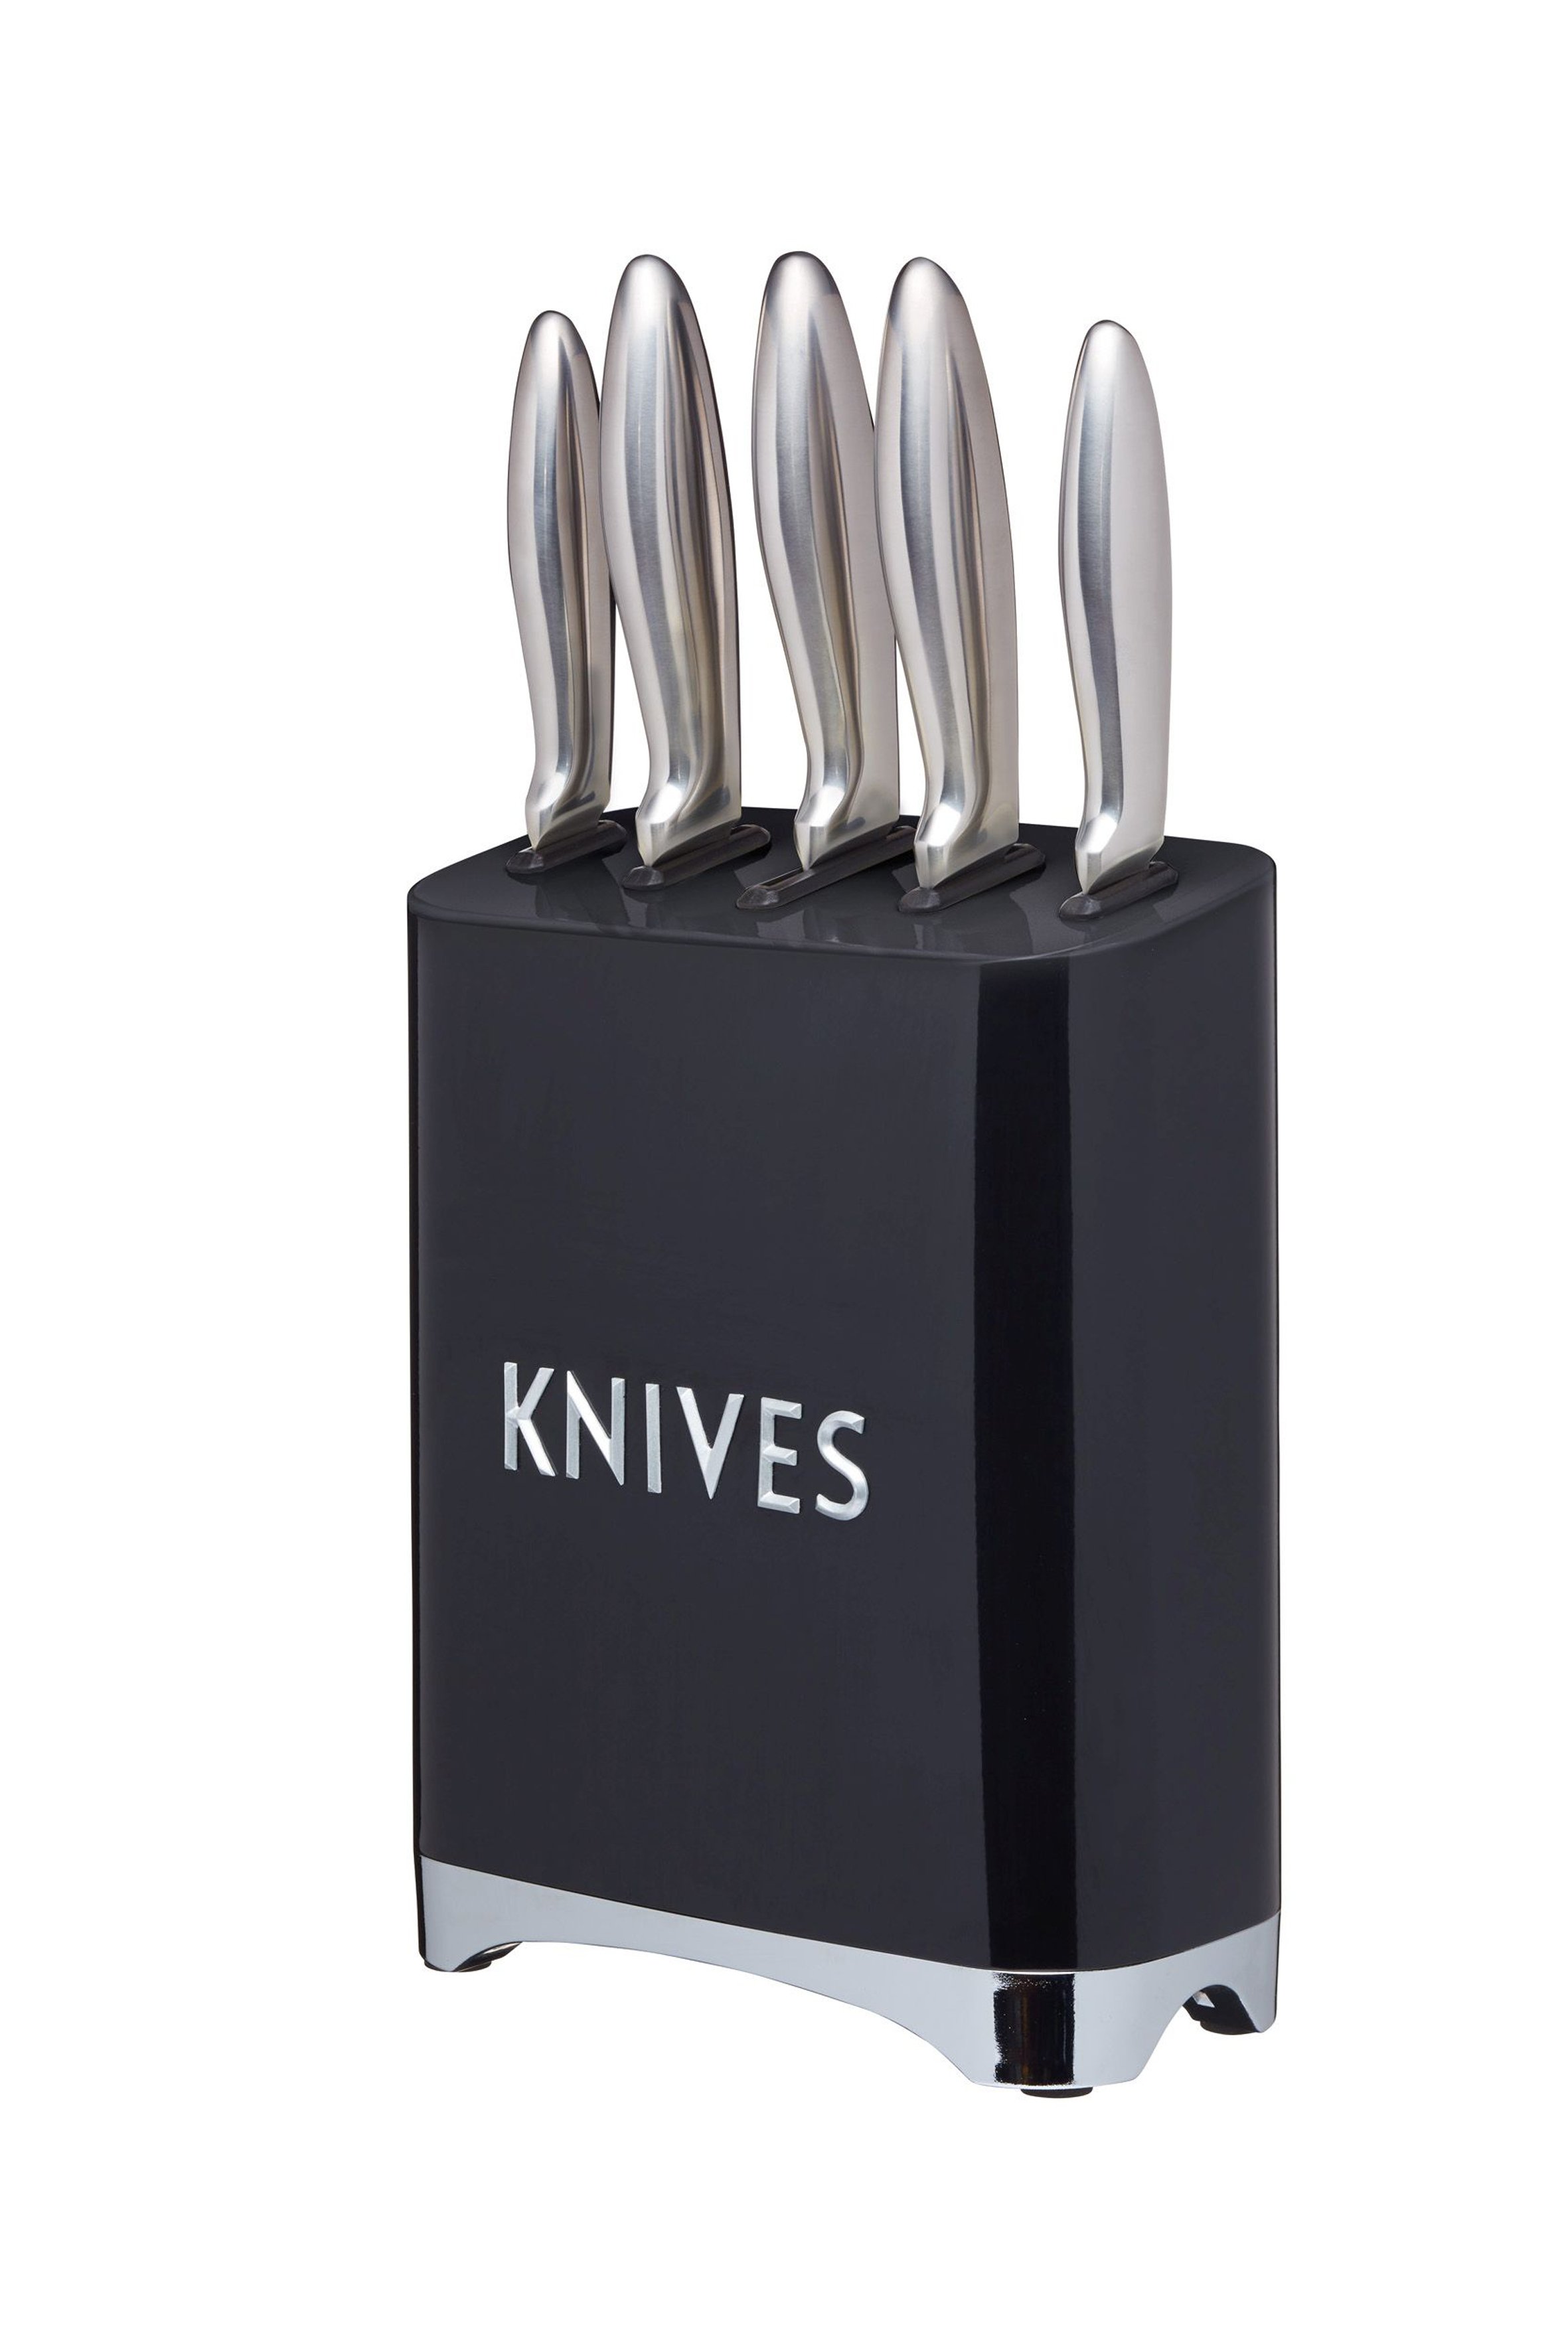 3. LOVELLO KitchenCraft Retro 5-Piece Stainless Steel Knife Set and Knife Block – Midnight Black €64.62,  